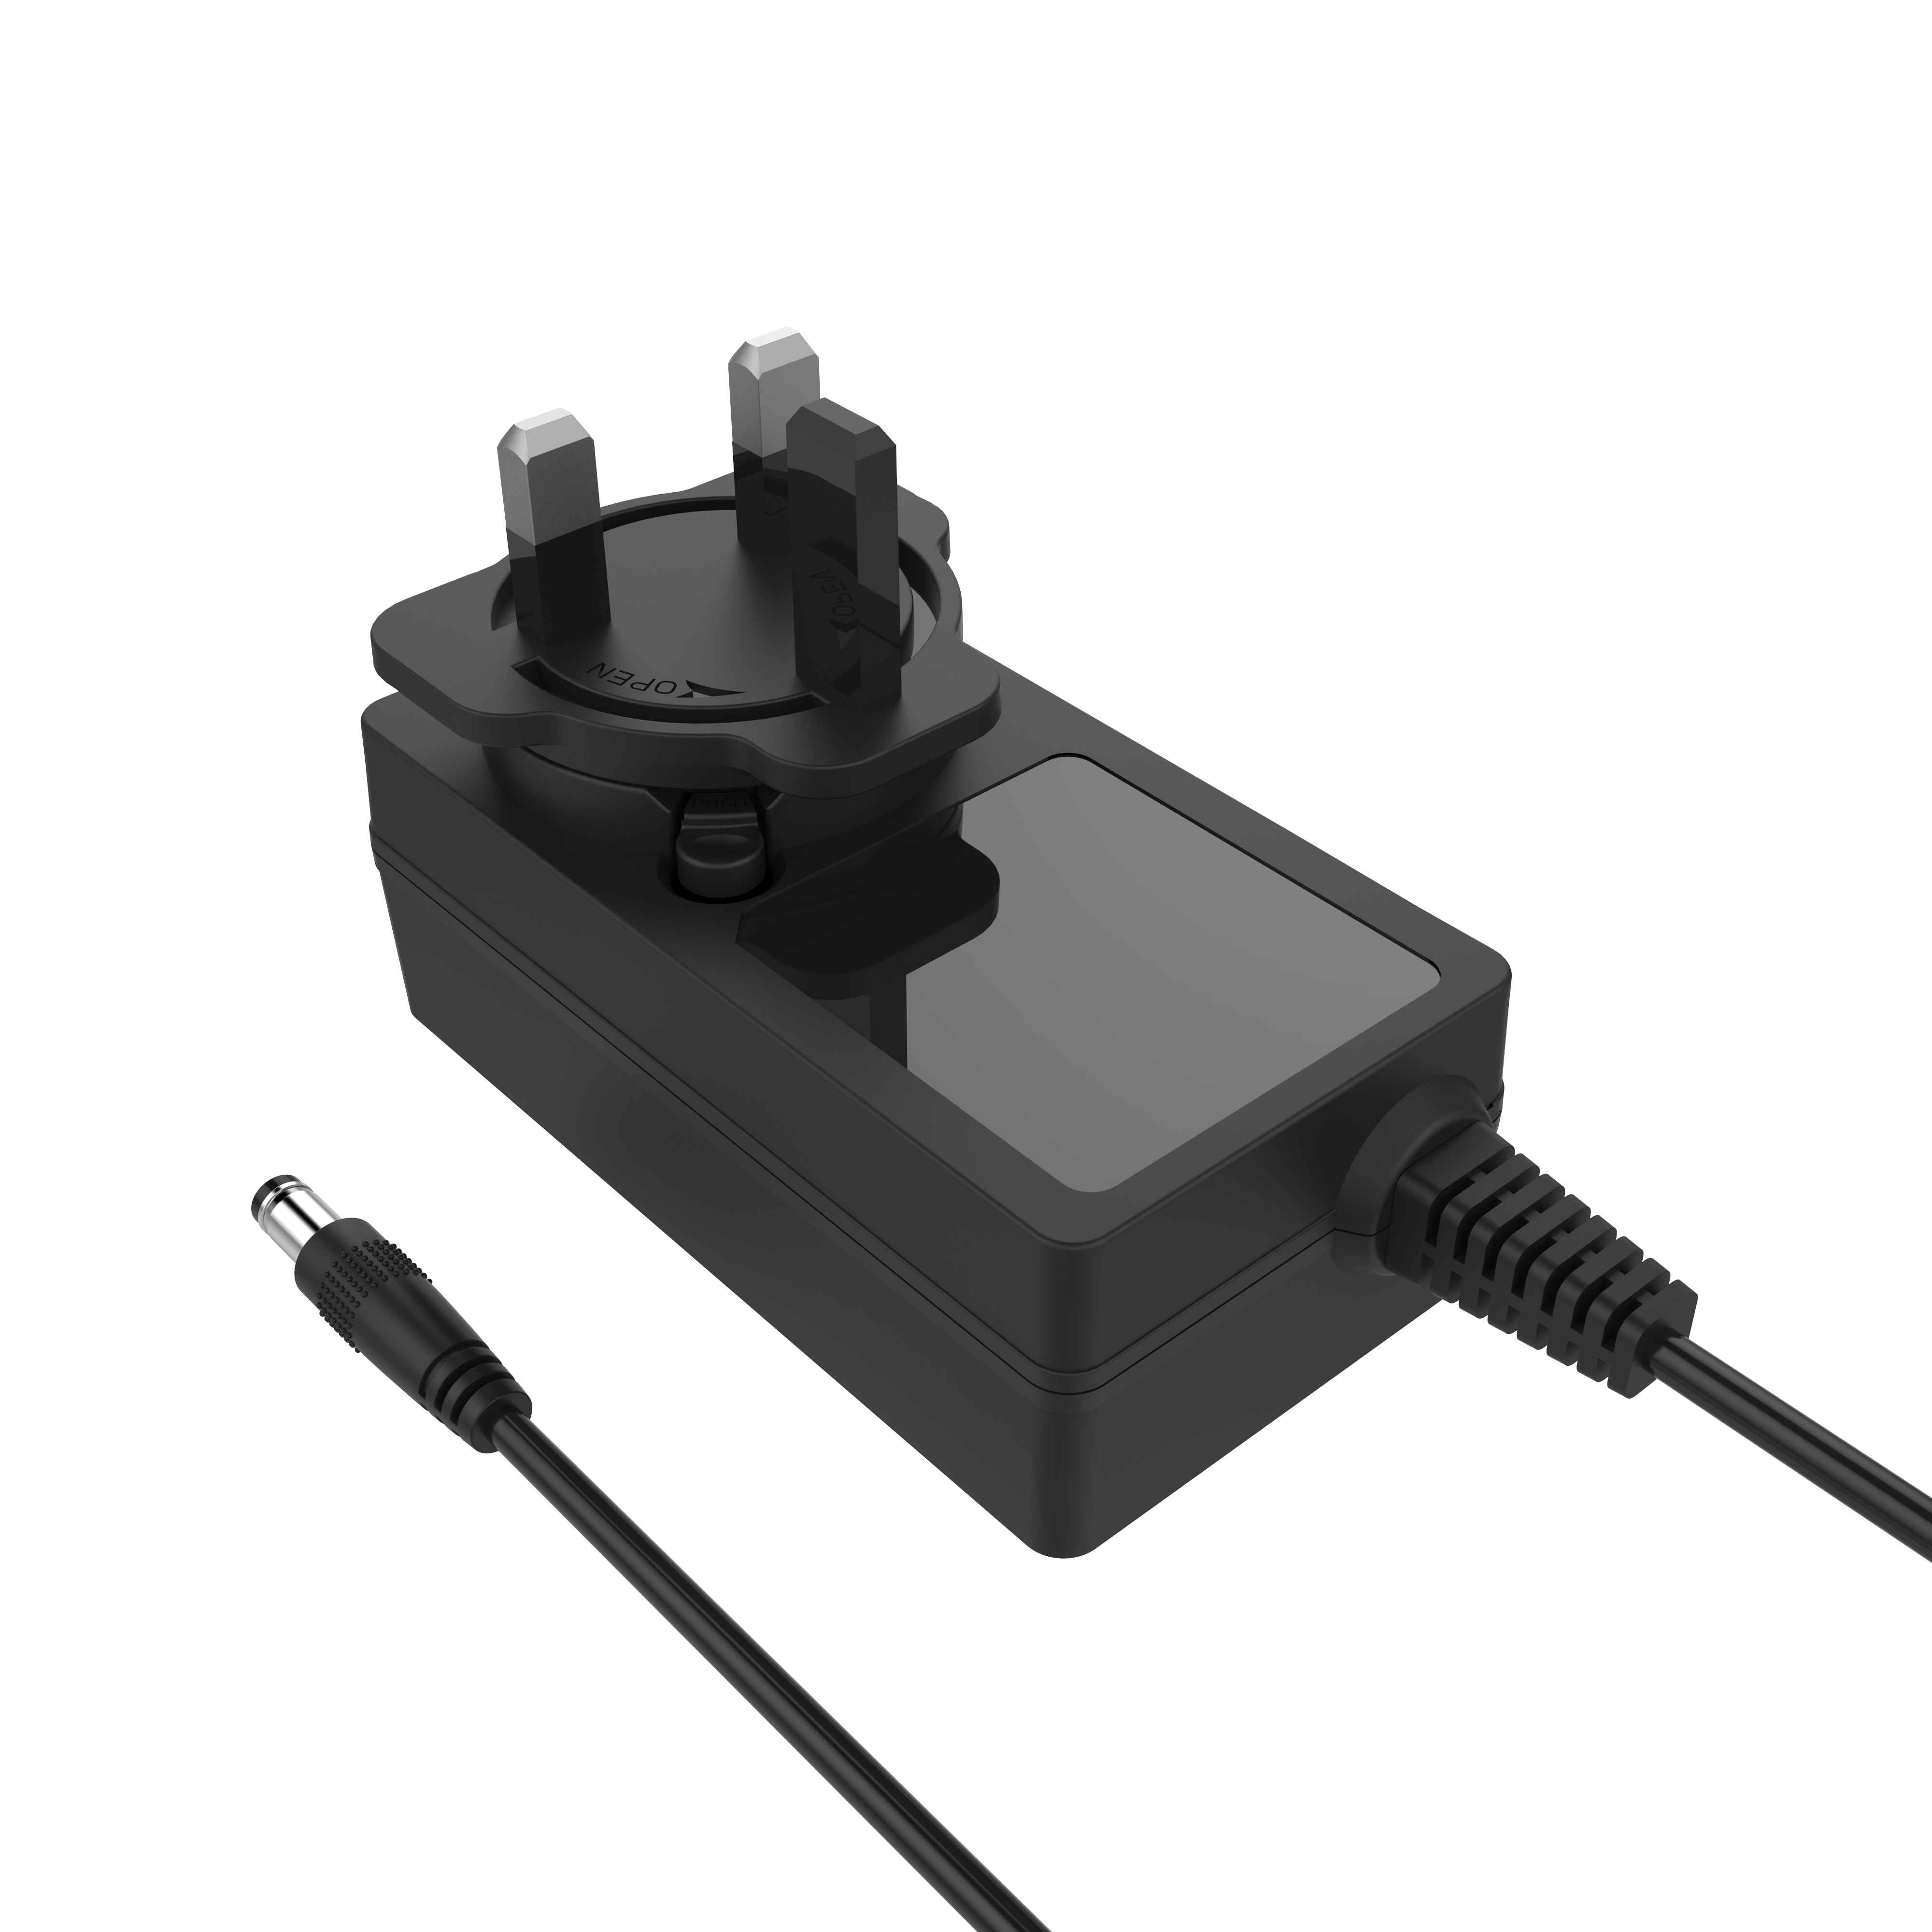 12v 4a interchangeable plug power adapter 24v 2a power supply UL ETL1310 EN61558/62368 CE GS SAA PSE CCC